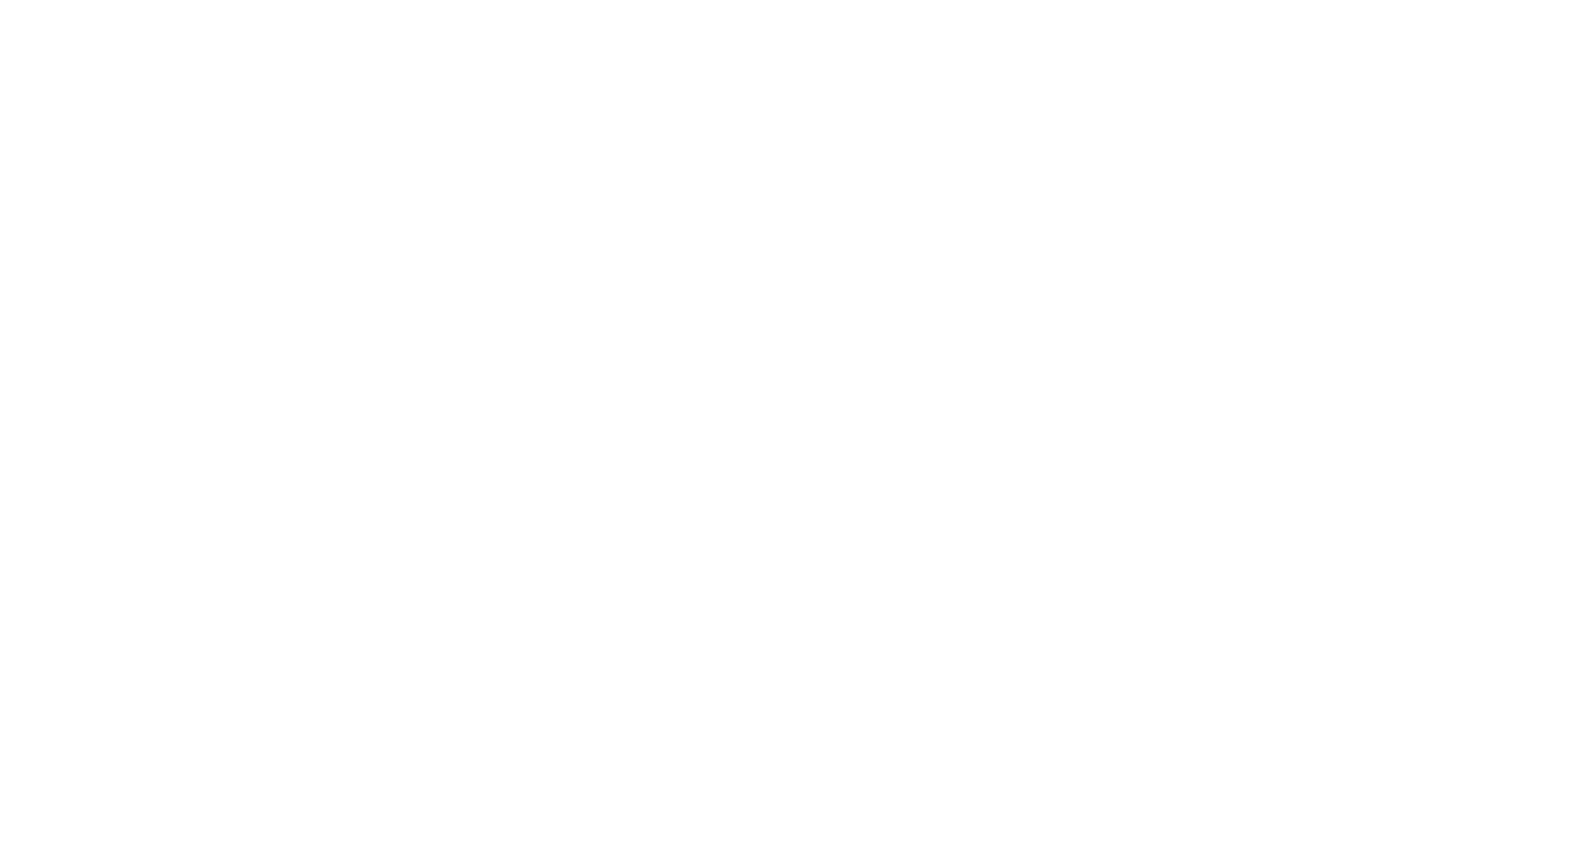 Warba Bank logo large for dark backgrounds (transparent PNG)